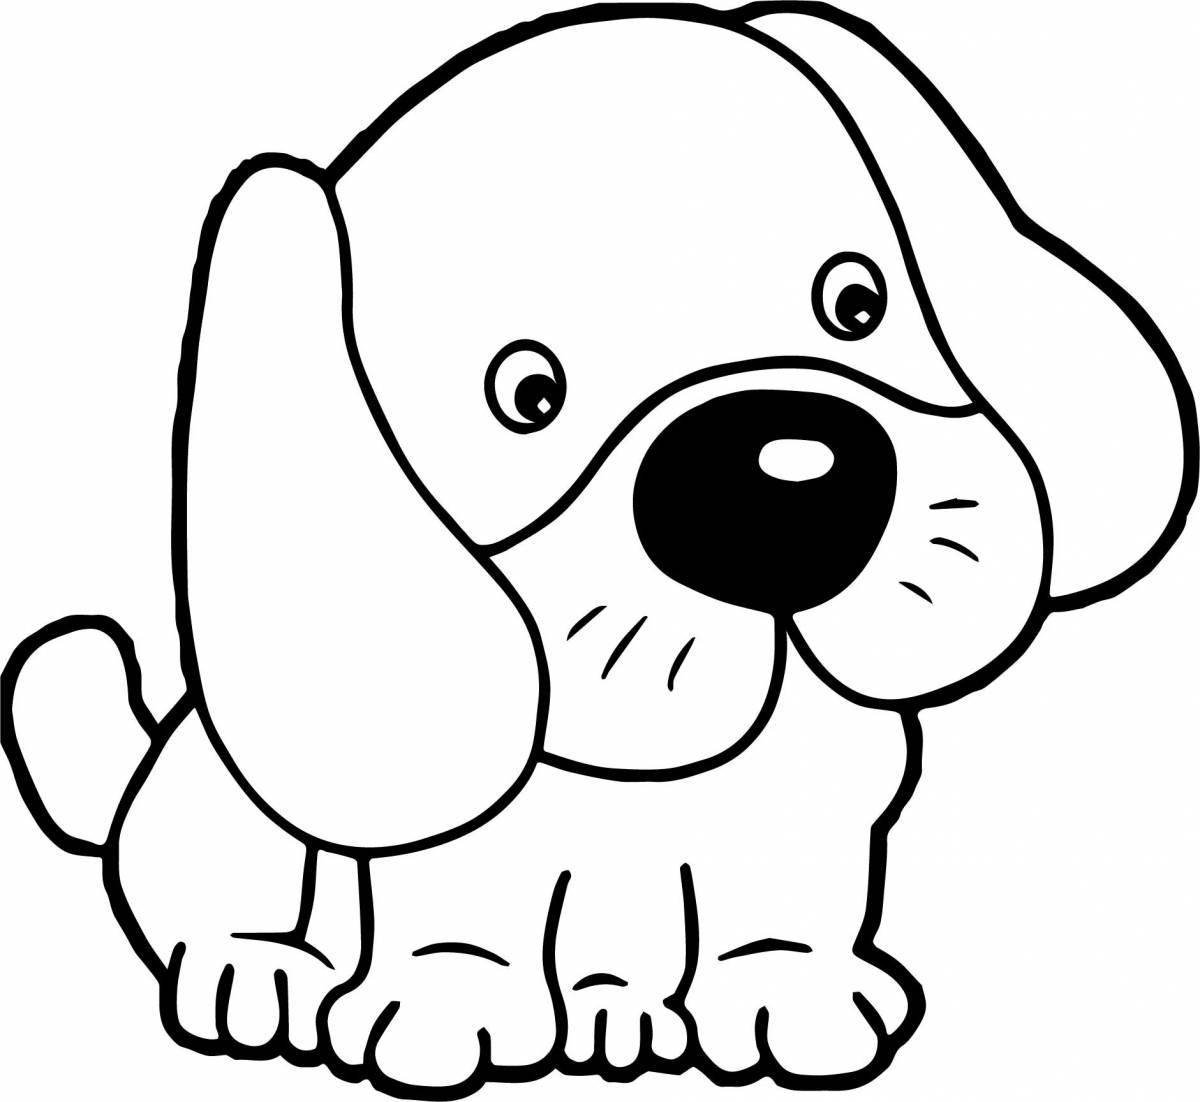 Coloring page adorable cartoon dog